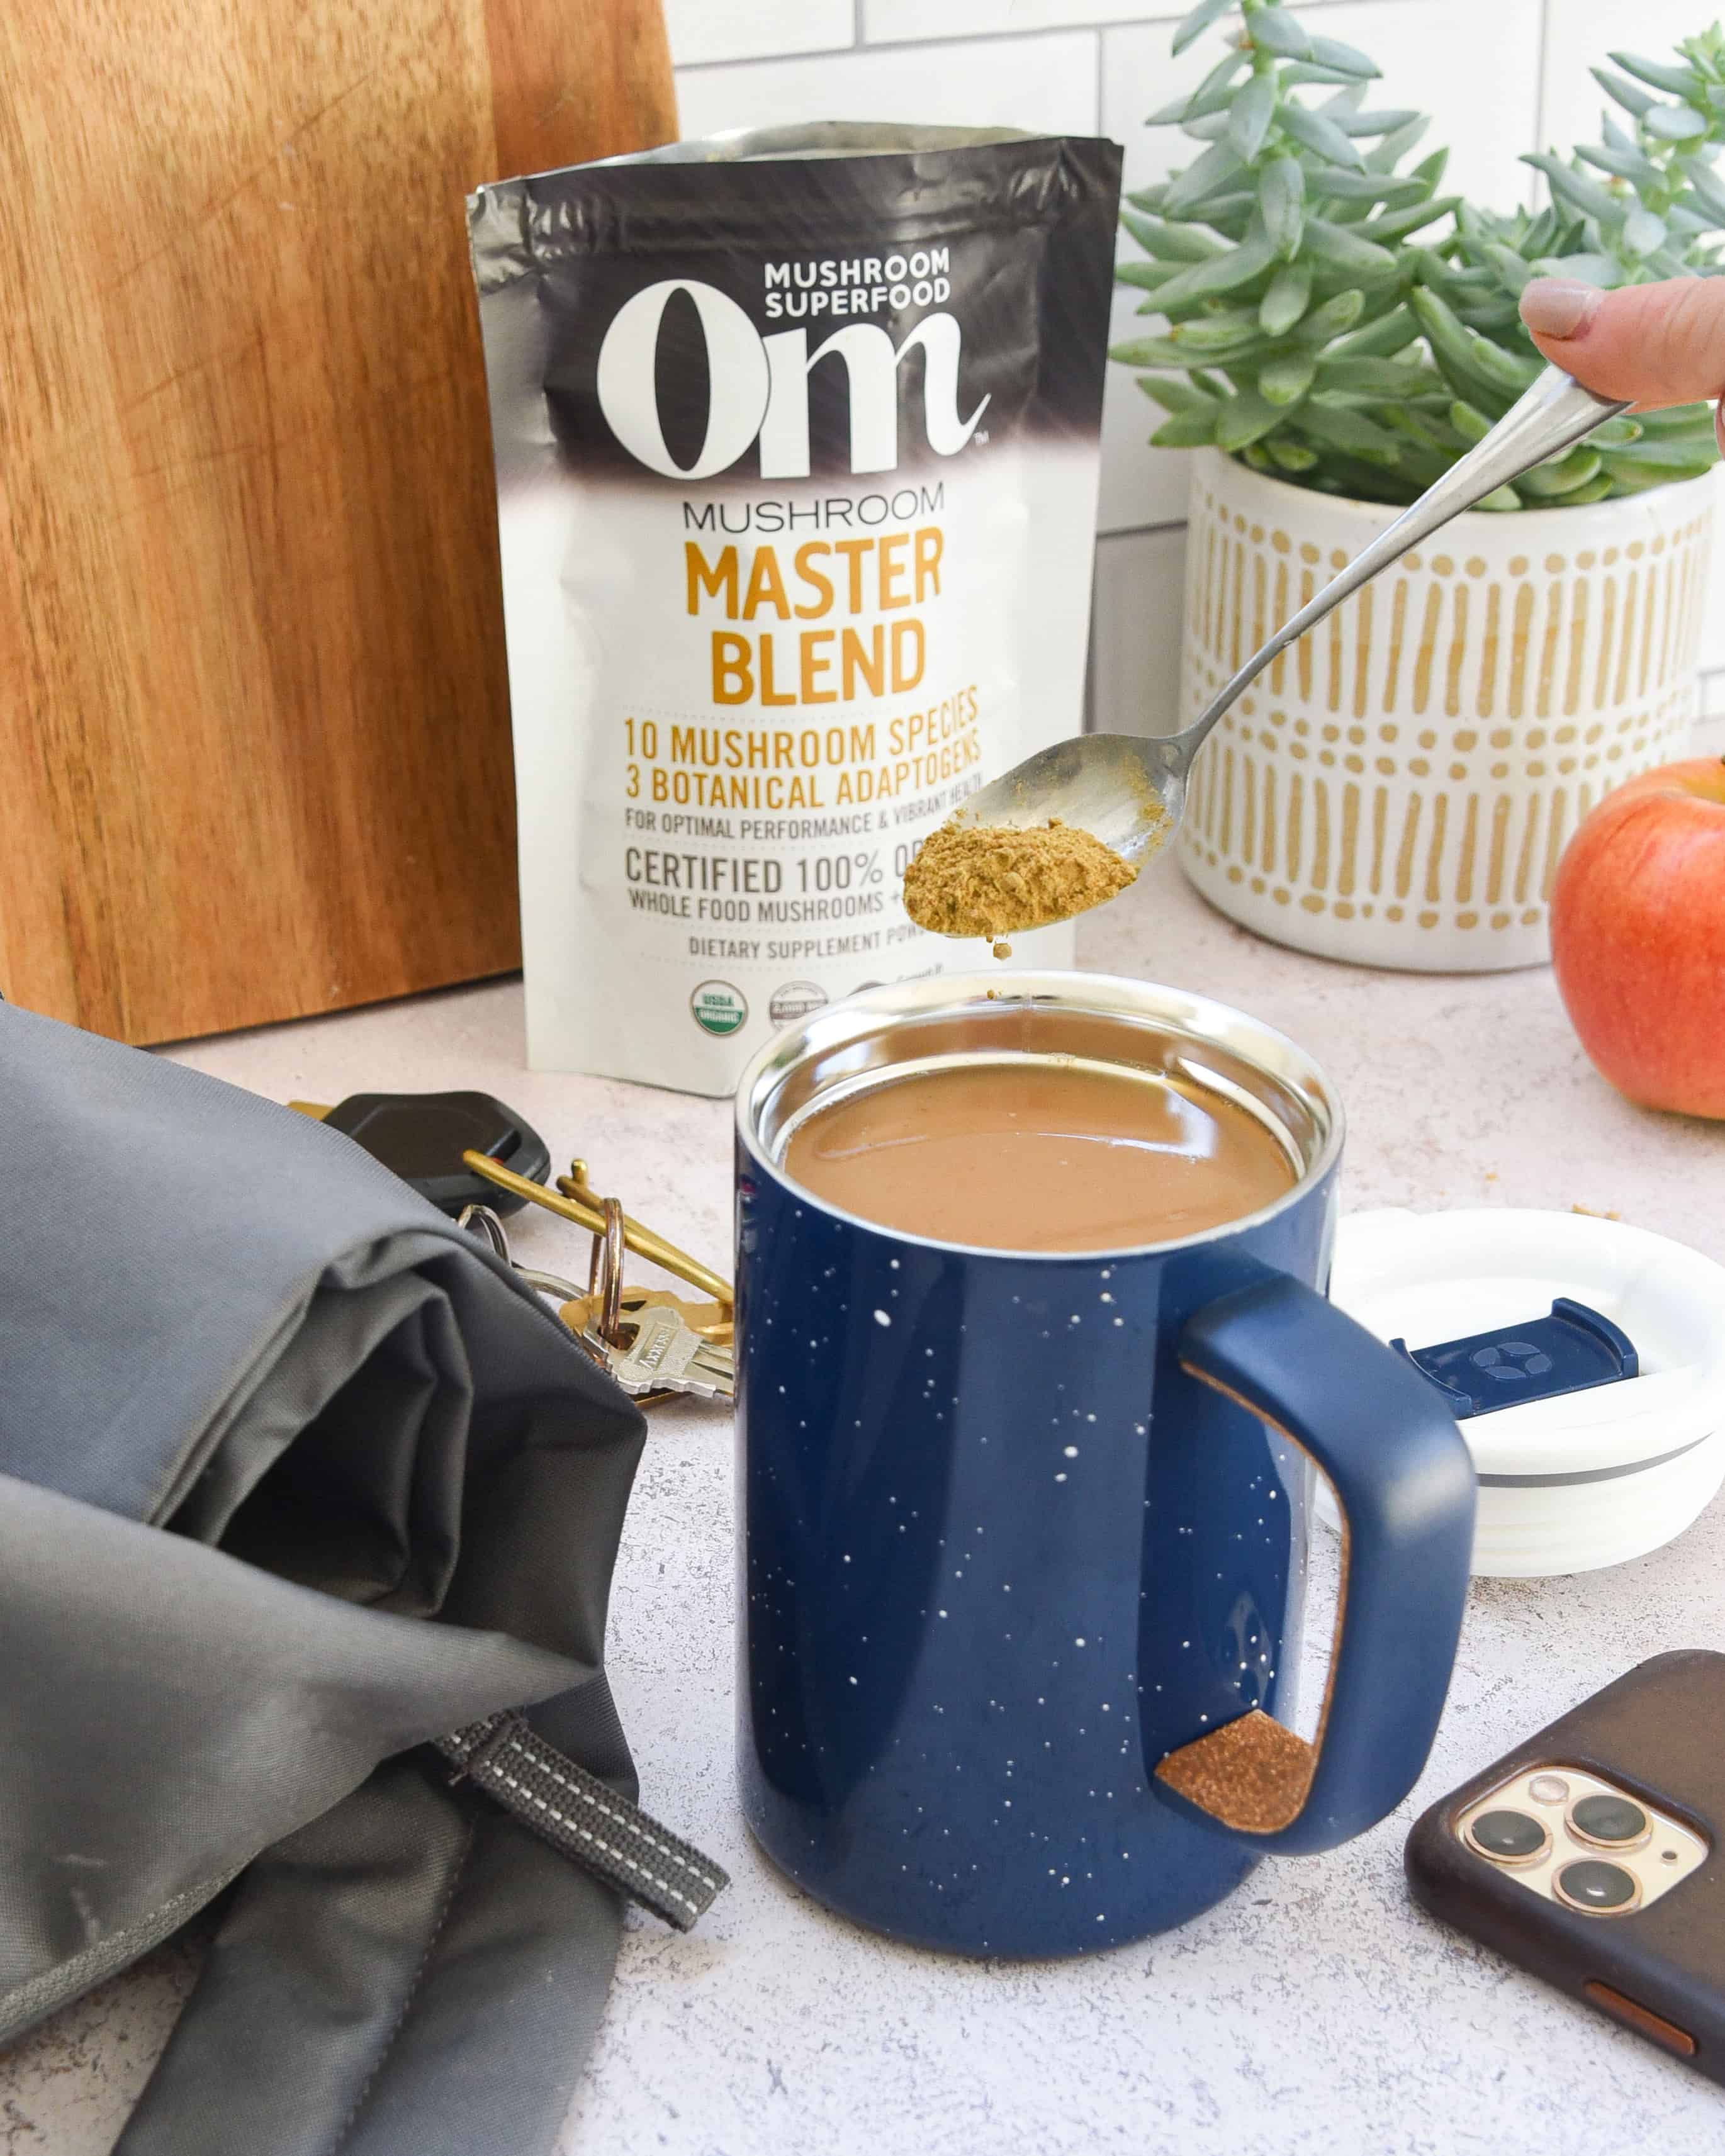 Mug of Om Master Blend coffee for fasting.